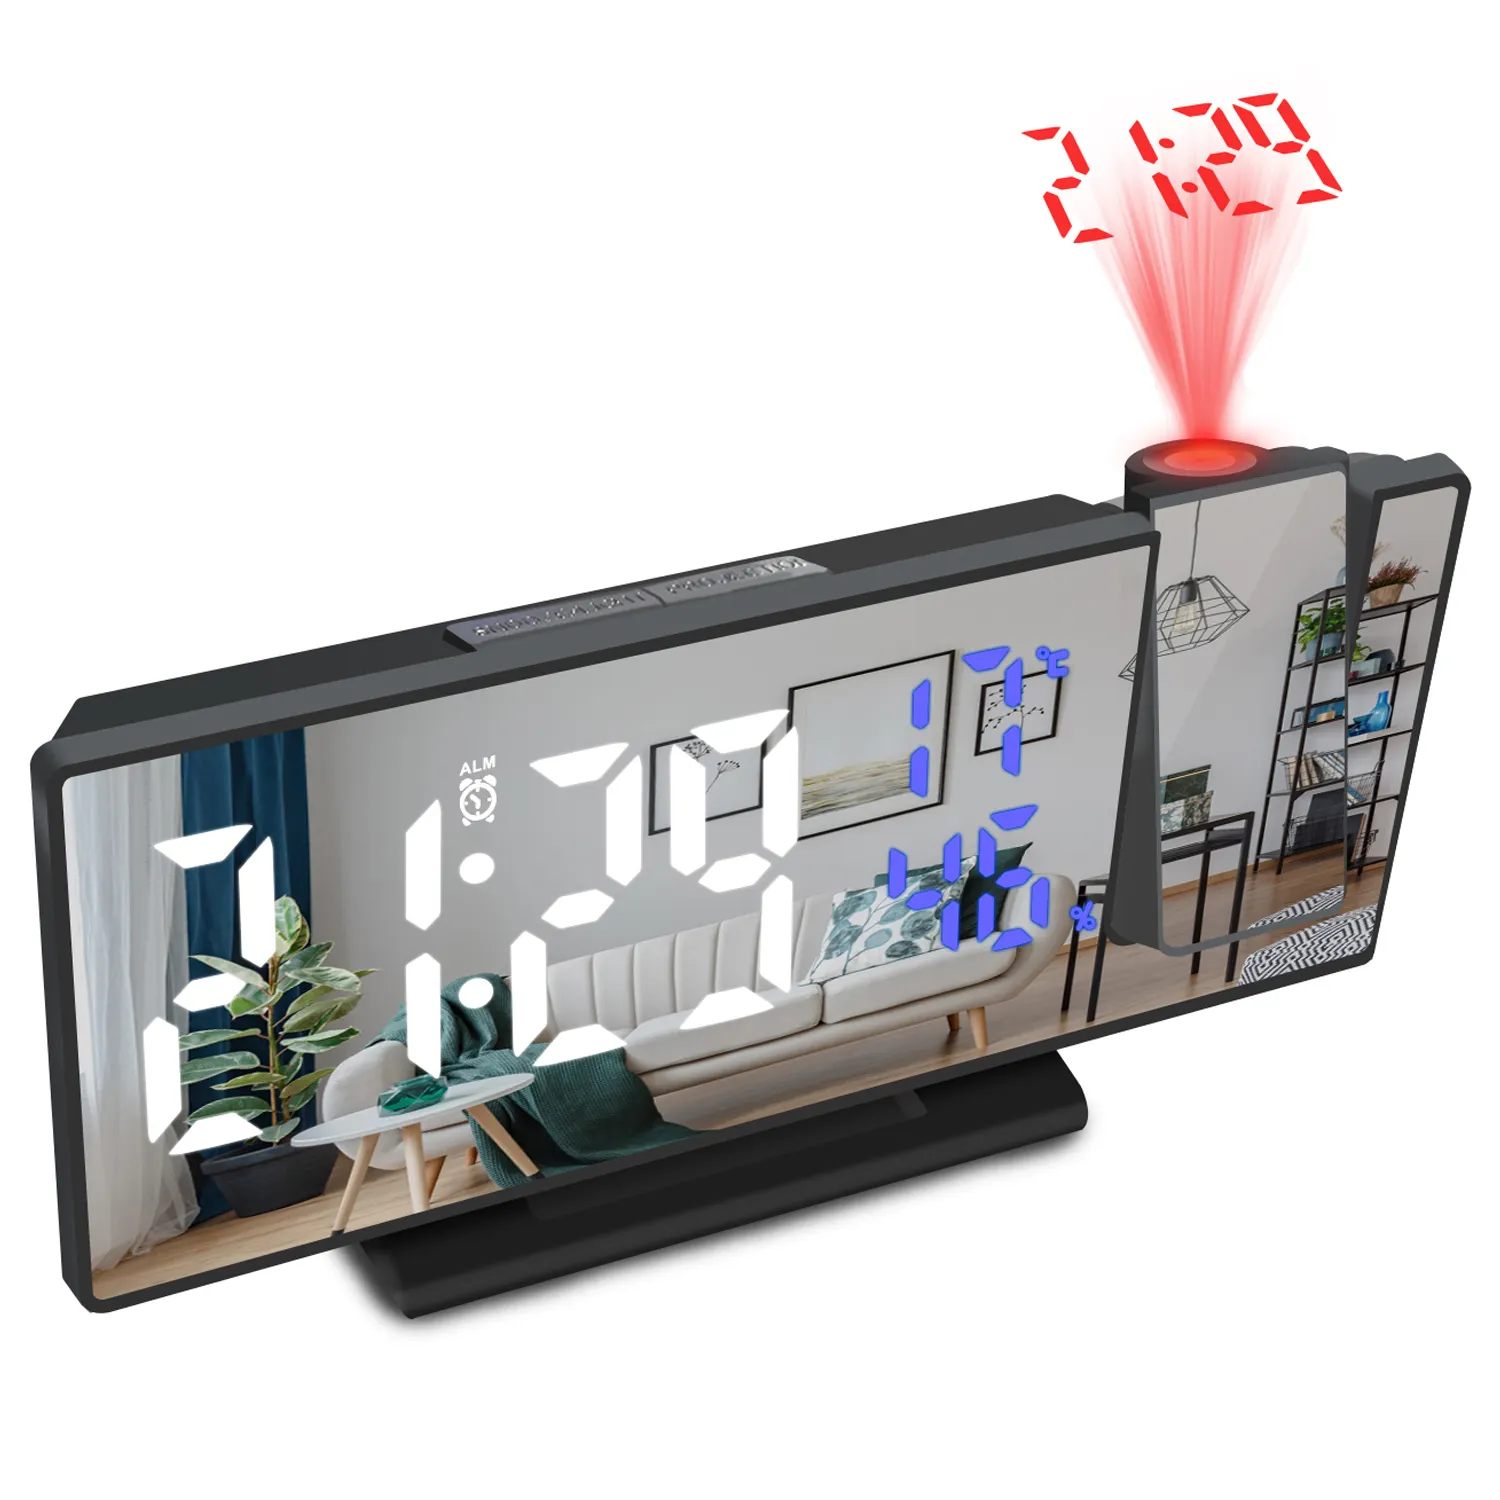 KH-CL034 Amazon Hot Selling Thermometer Hygrometer Bedside Desk Mirror Projection LED Smart Table Digital Alarm Clock for Kids